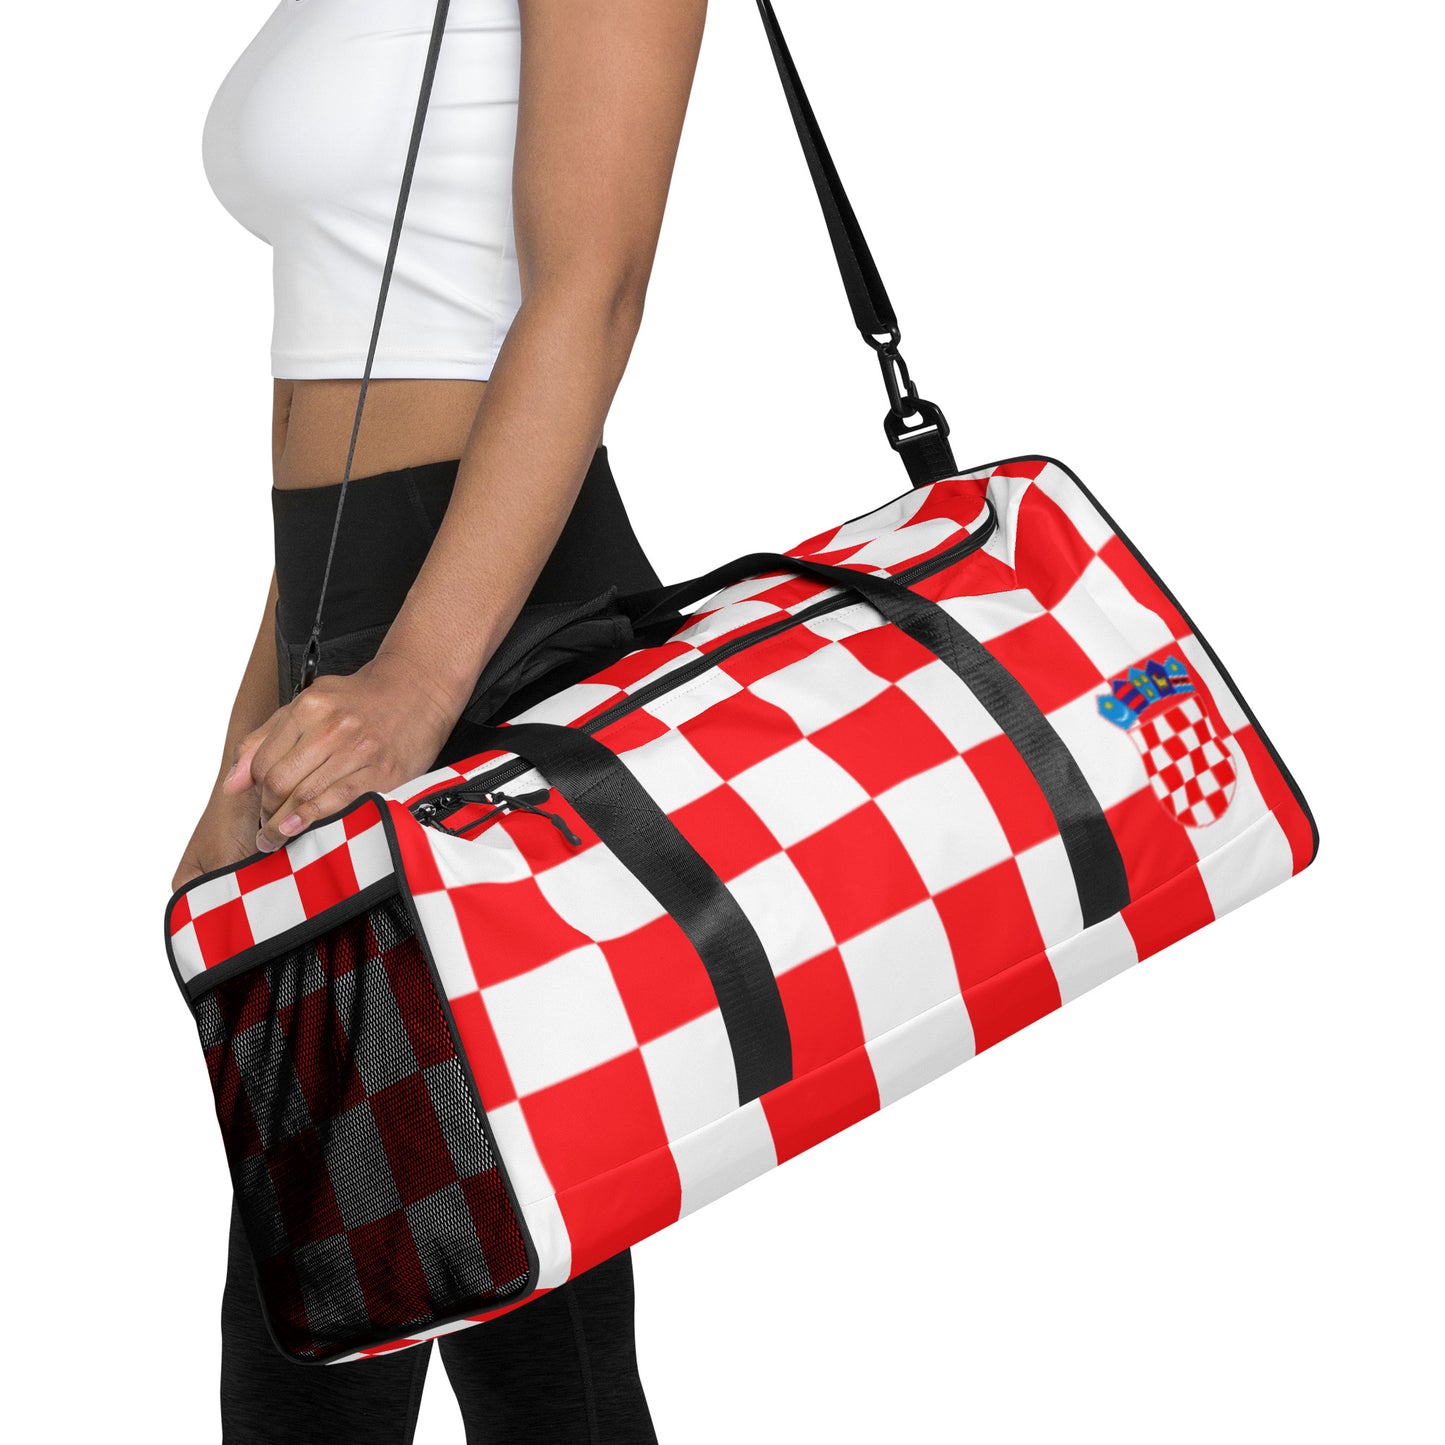 Croatian Red Checkered 'Ajmo' Duffle bag